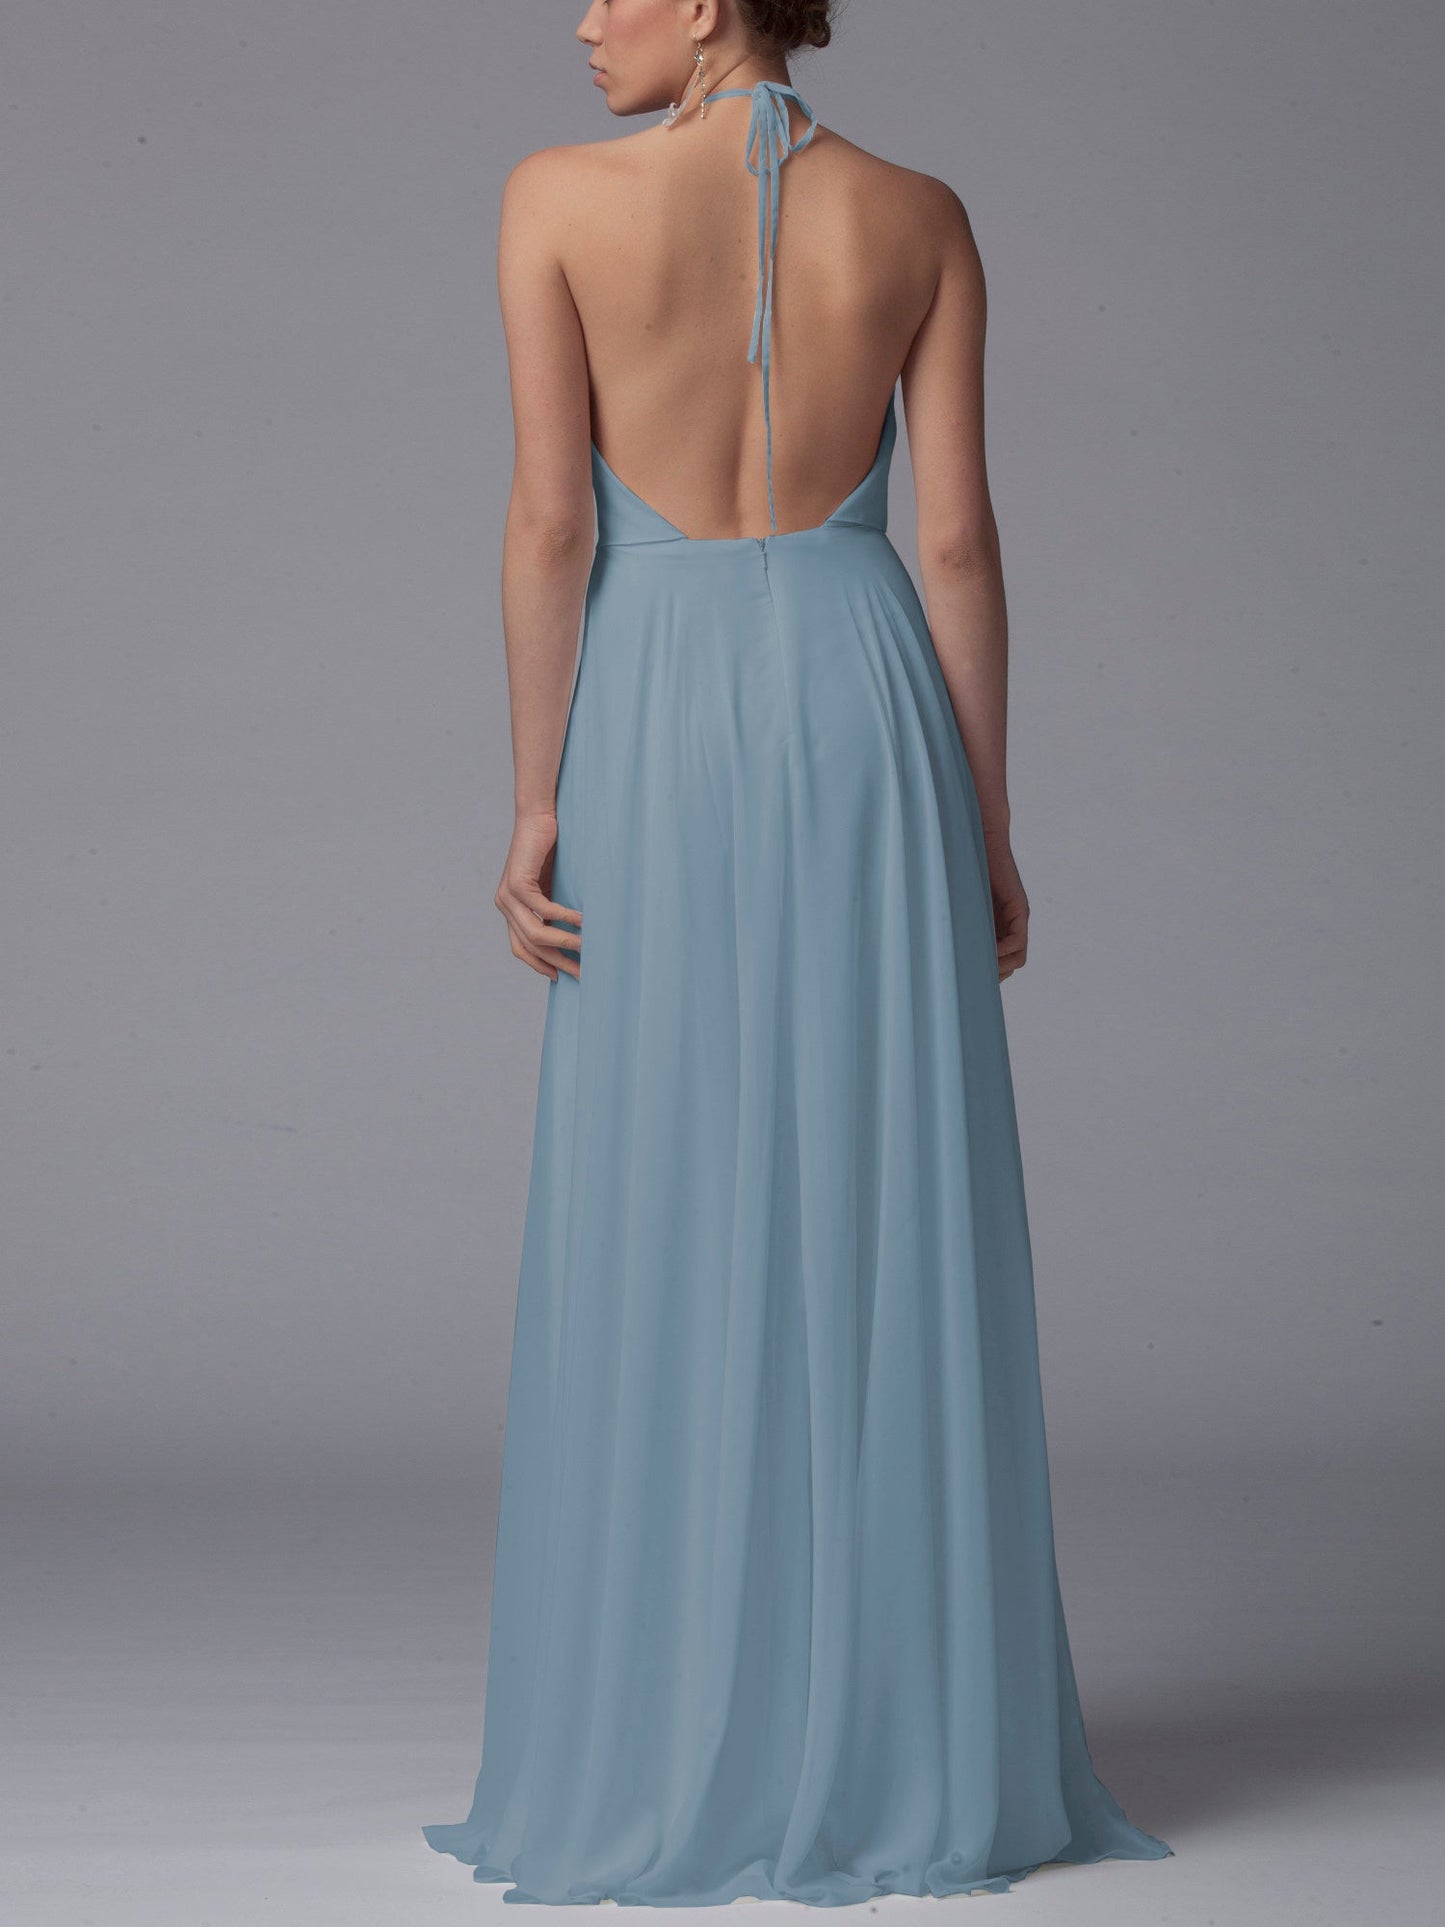 Chiffon Straps Sleeveless Bridesmaid Dress| Plus Size | 60+ Colors